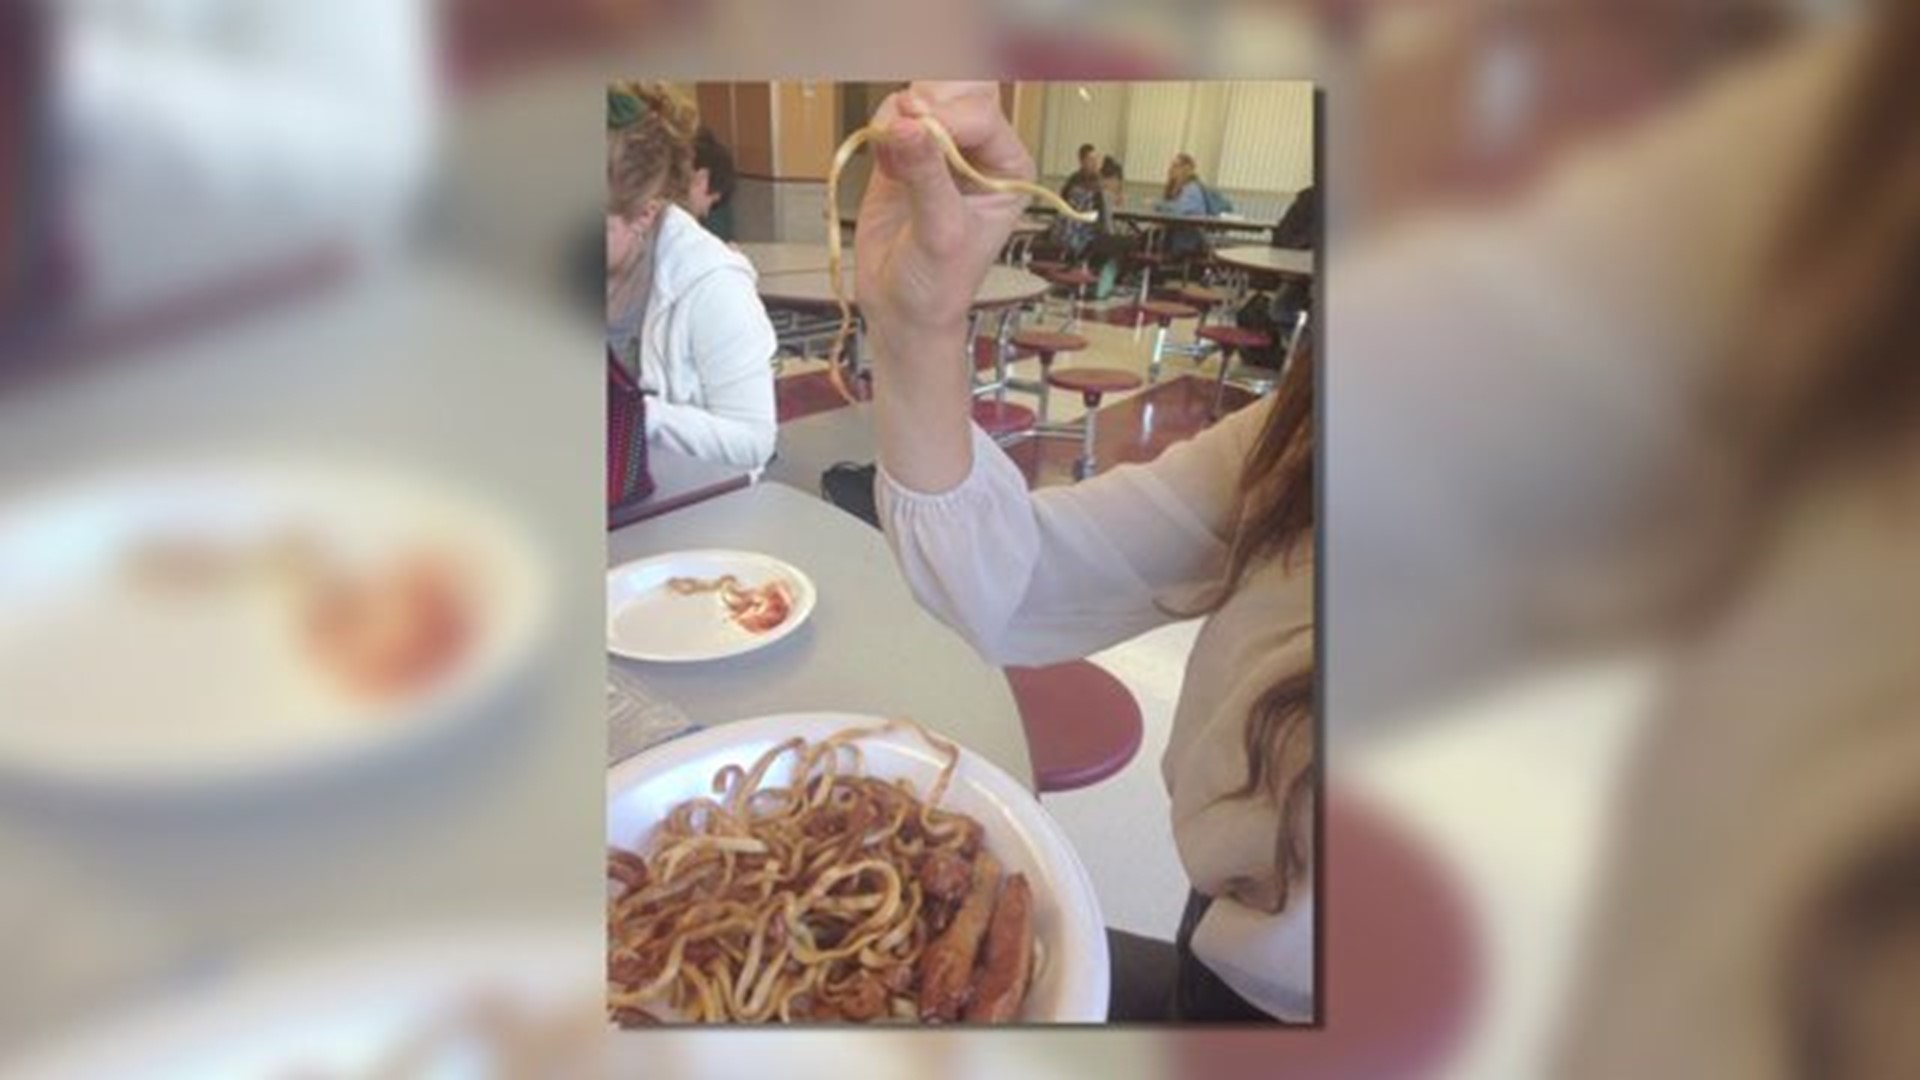 Unedible food leads Farmington students to protest cafeteria